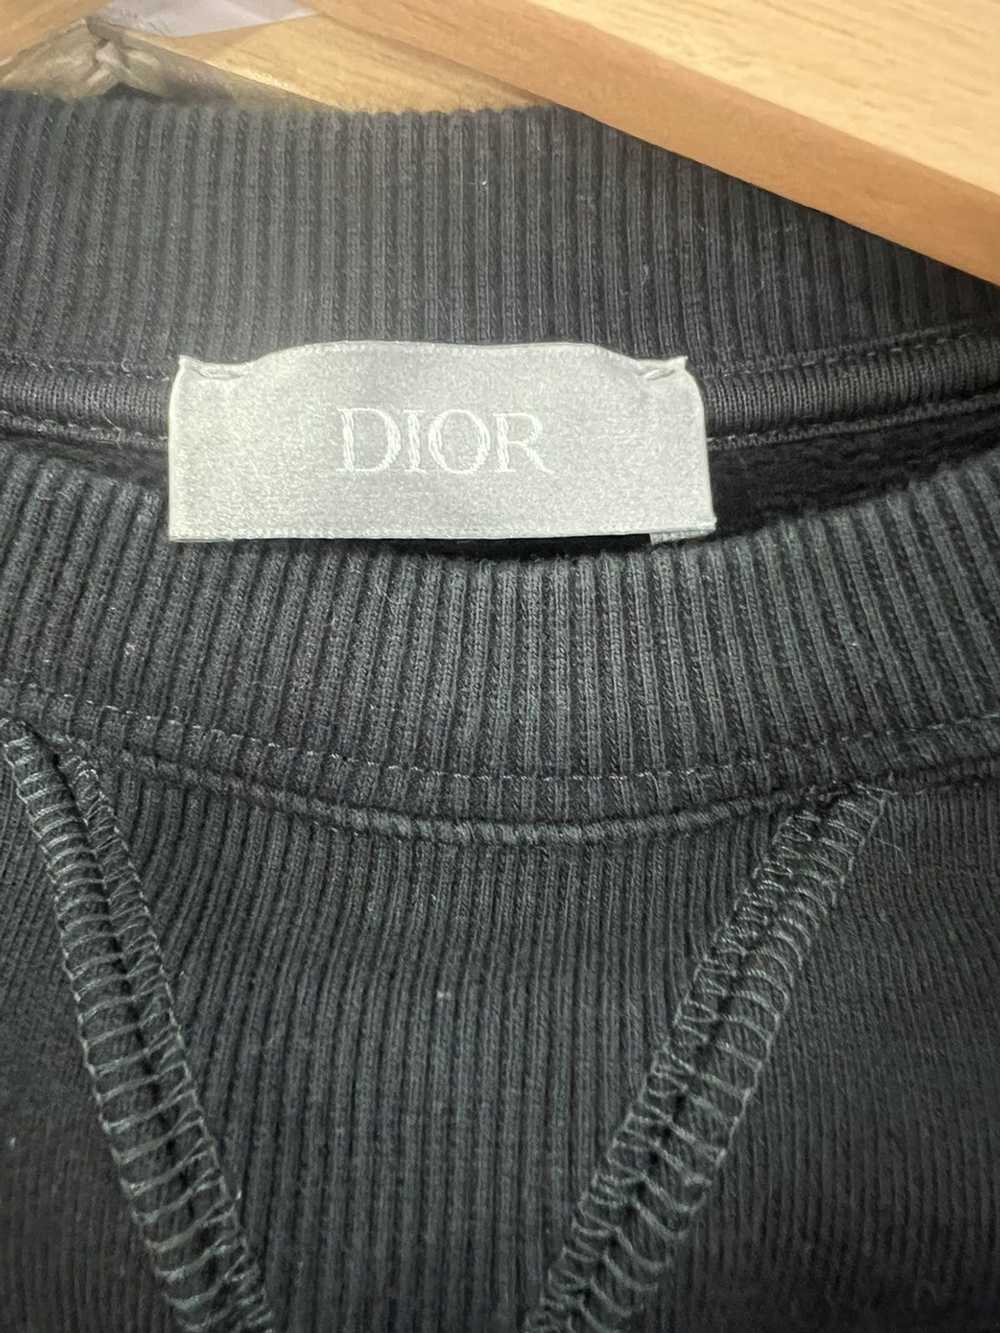 Dior Christian Dior “Kenny Scharf” - image 5